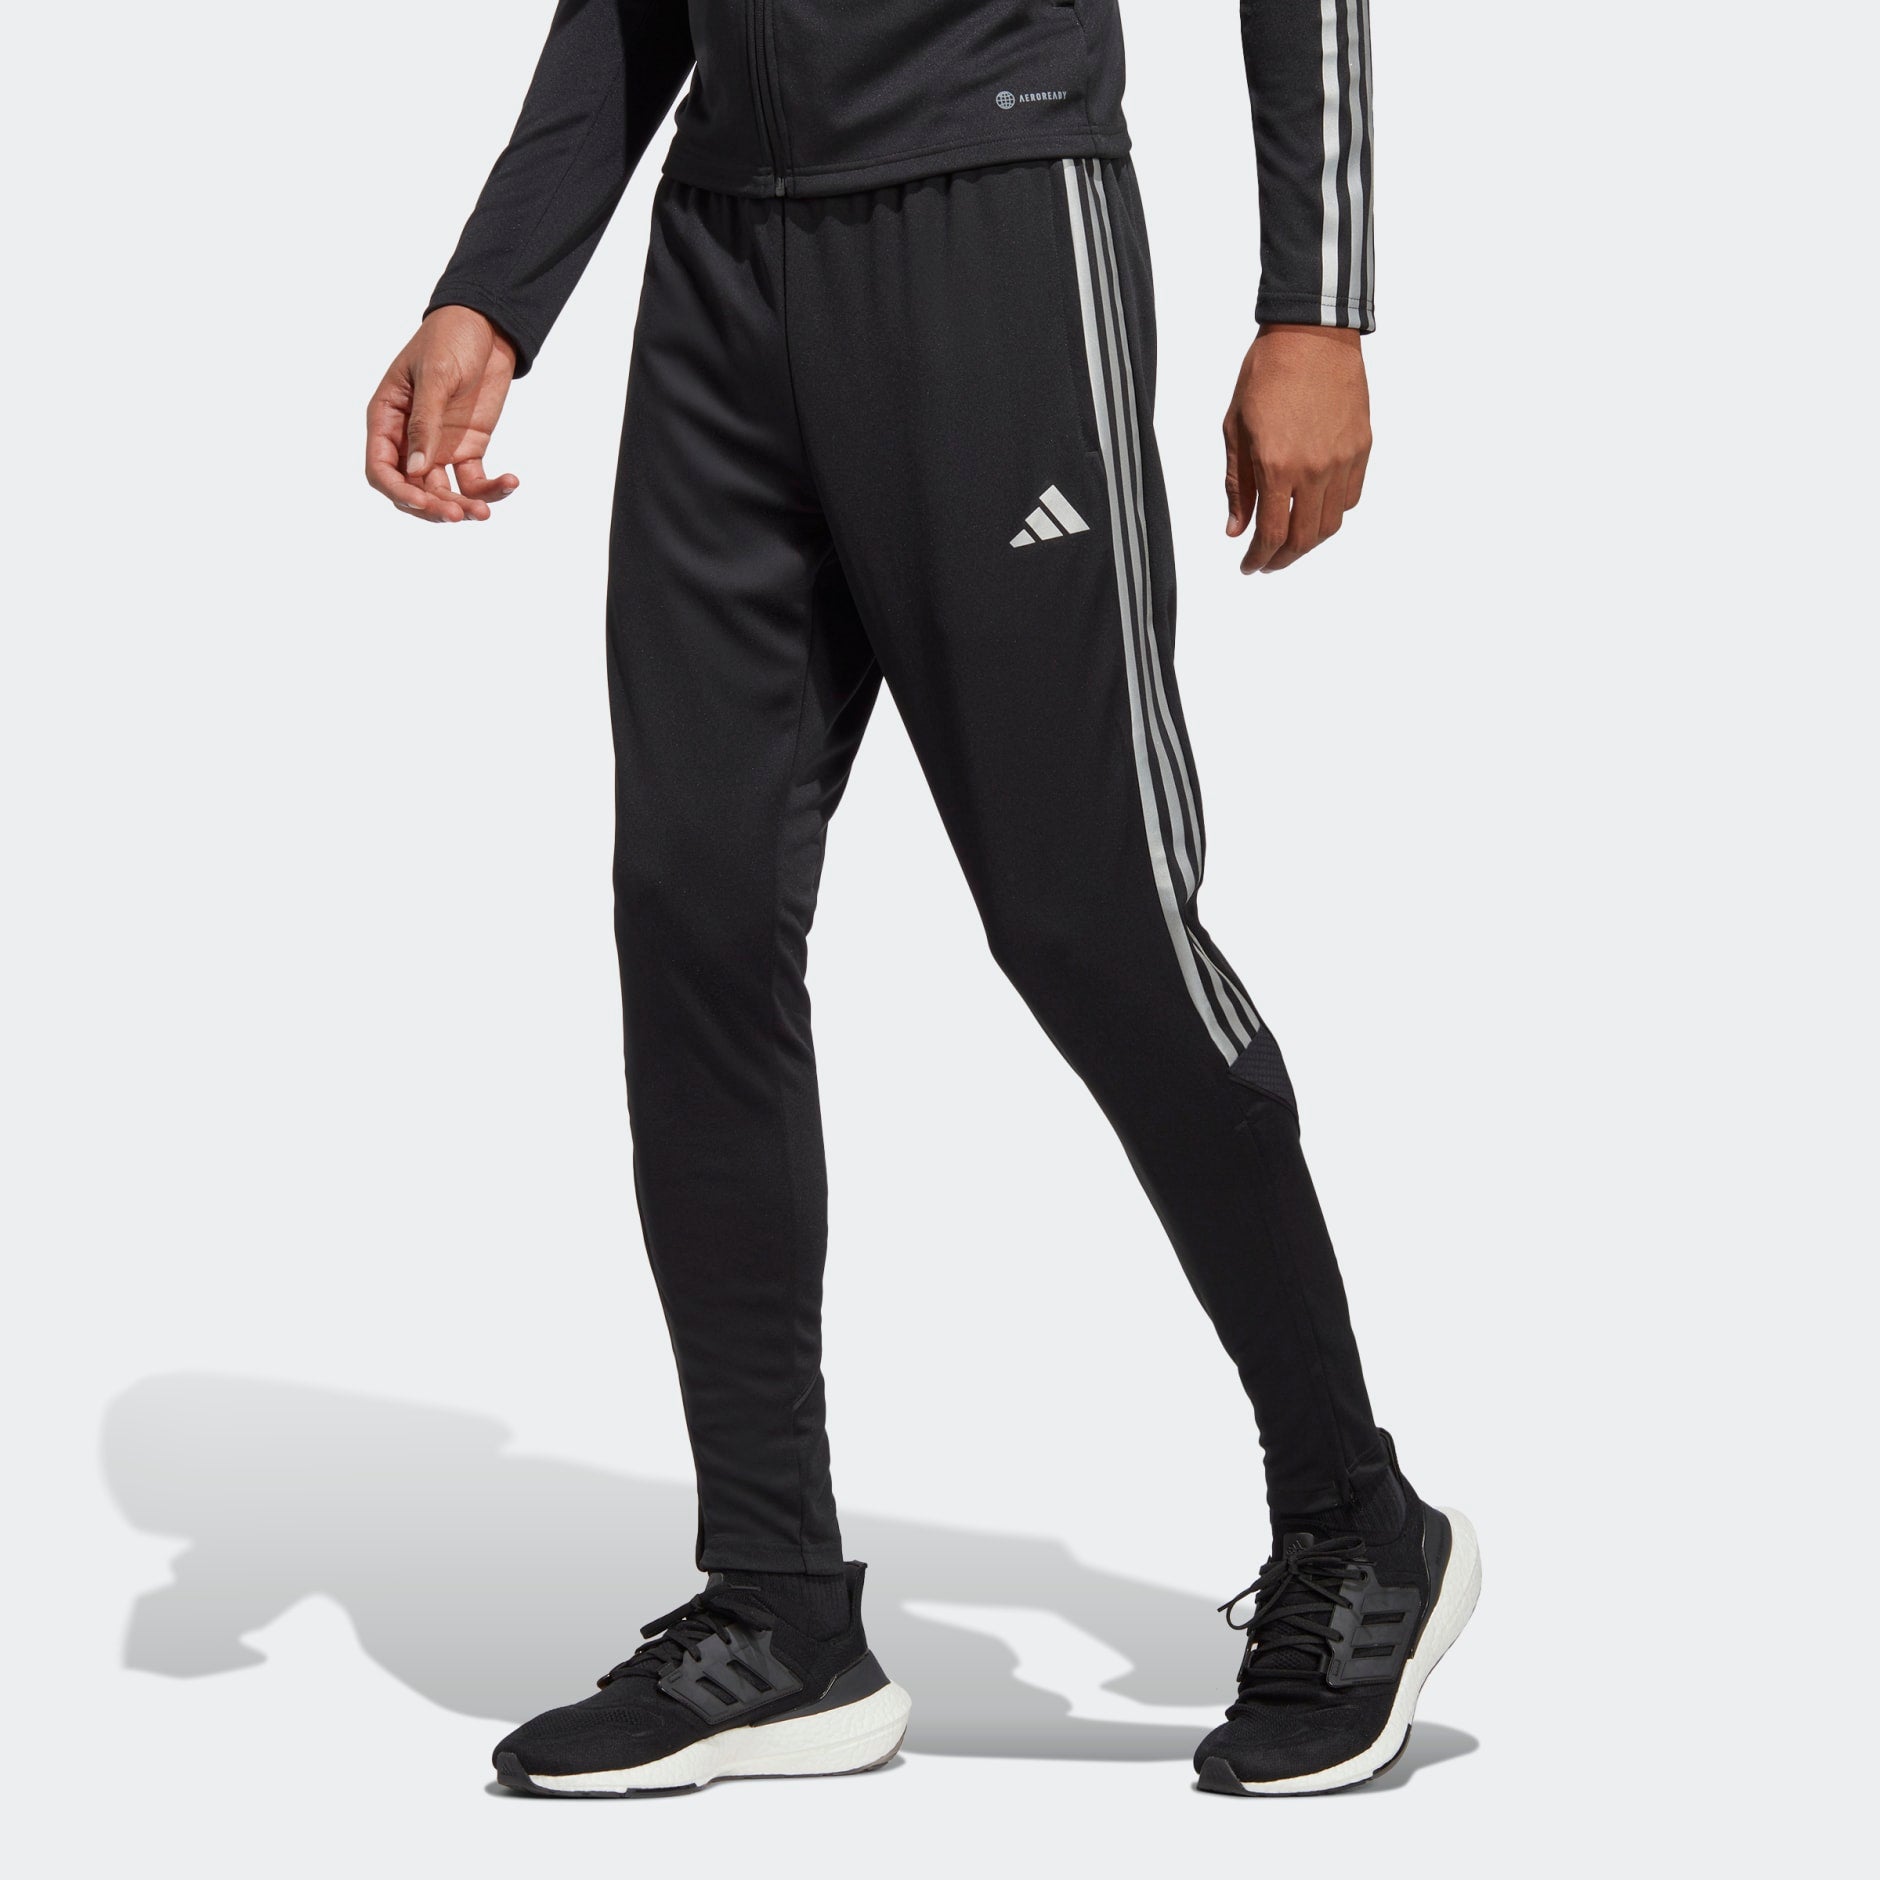 RARE! Limited Edition Nike Pro X-ray Skeleton Leggings size small |  Skeleton leggings, Stella mccartney adidas, Nike pros